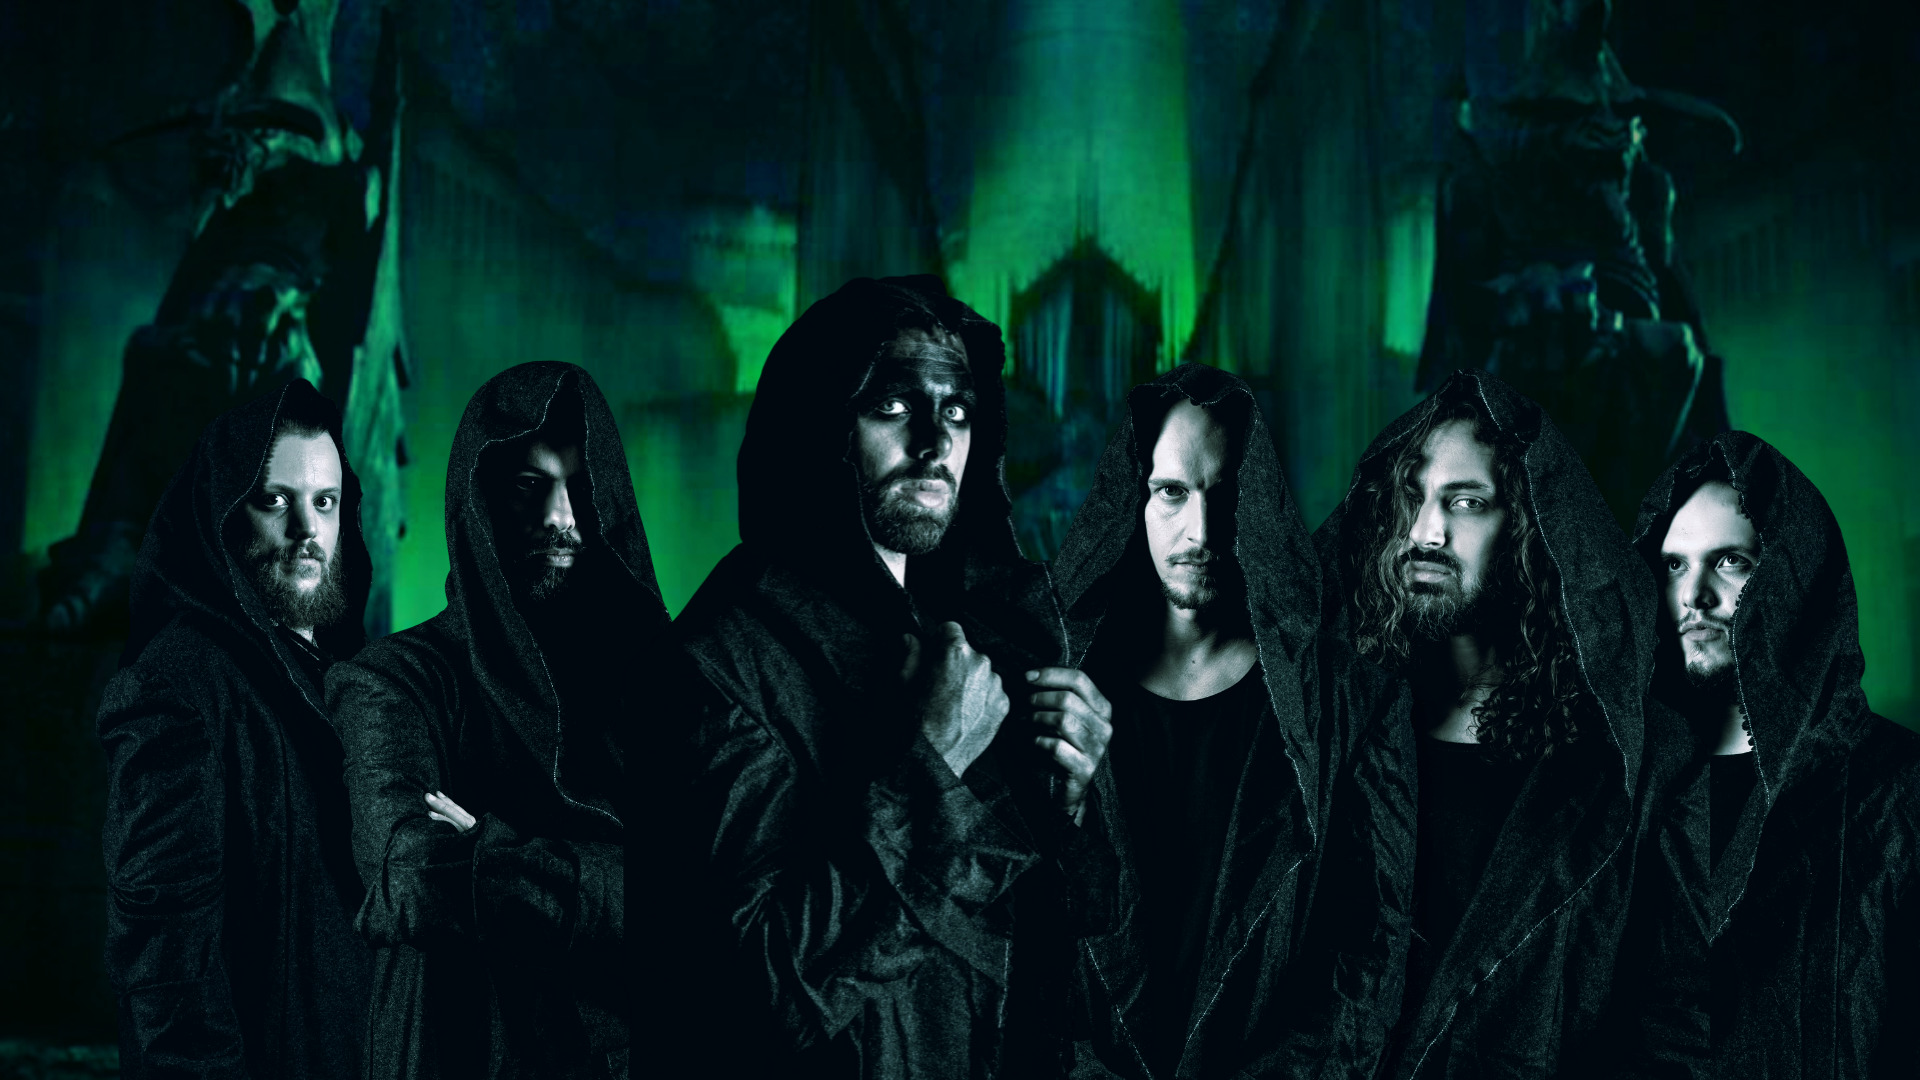 RUINTHRONE – la band power metal ispirata a Tolkien svela il nuovo singolo “The Past Is Yet To Come”